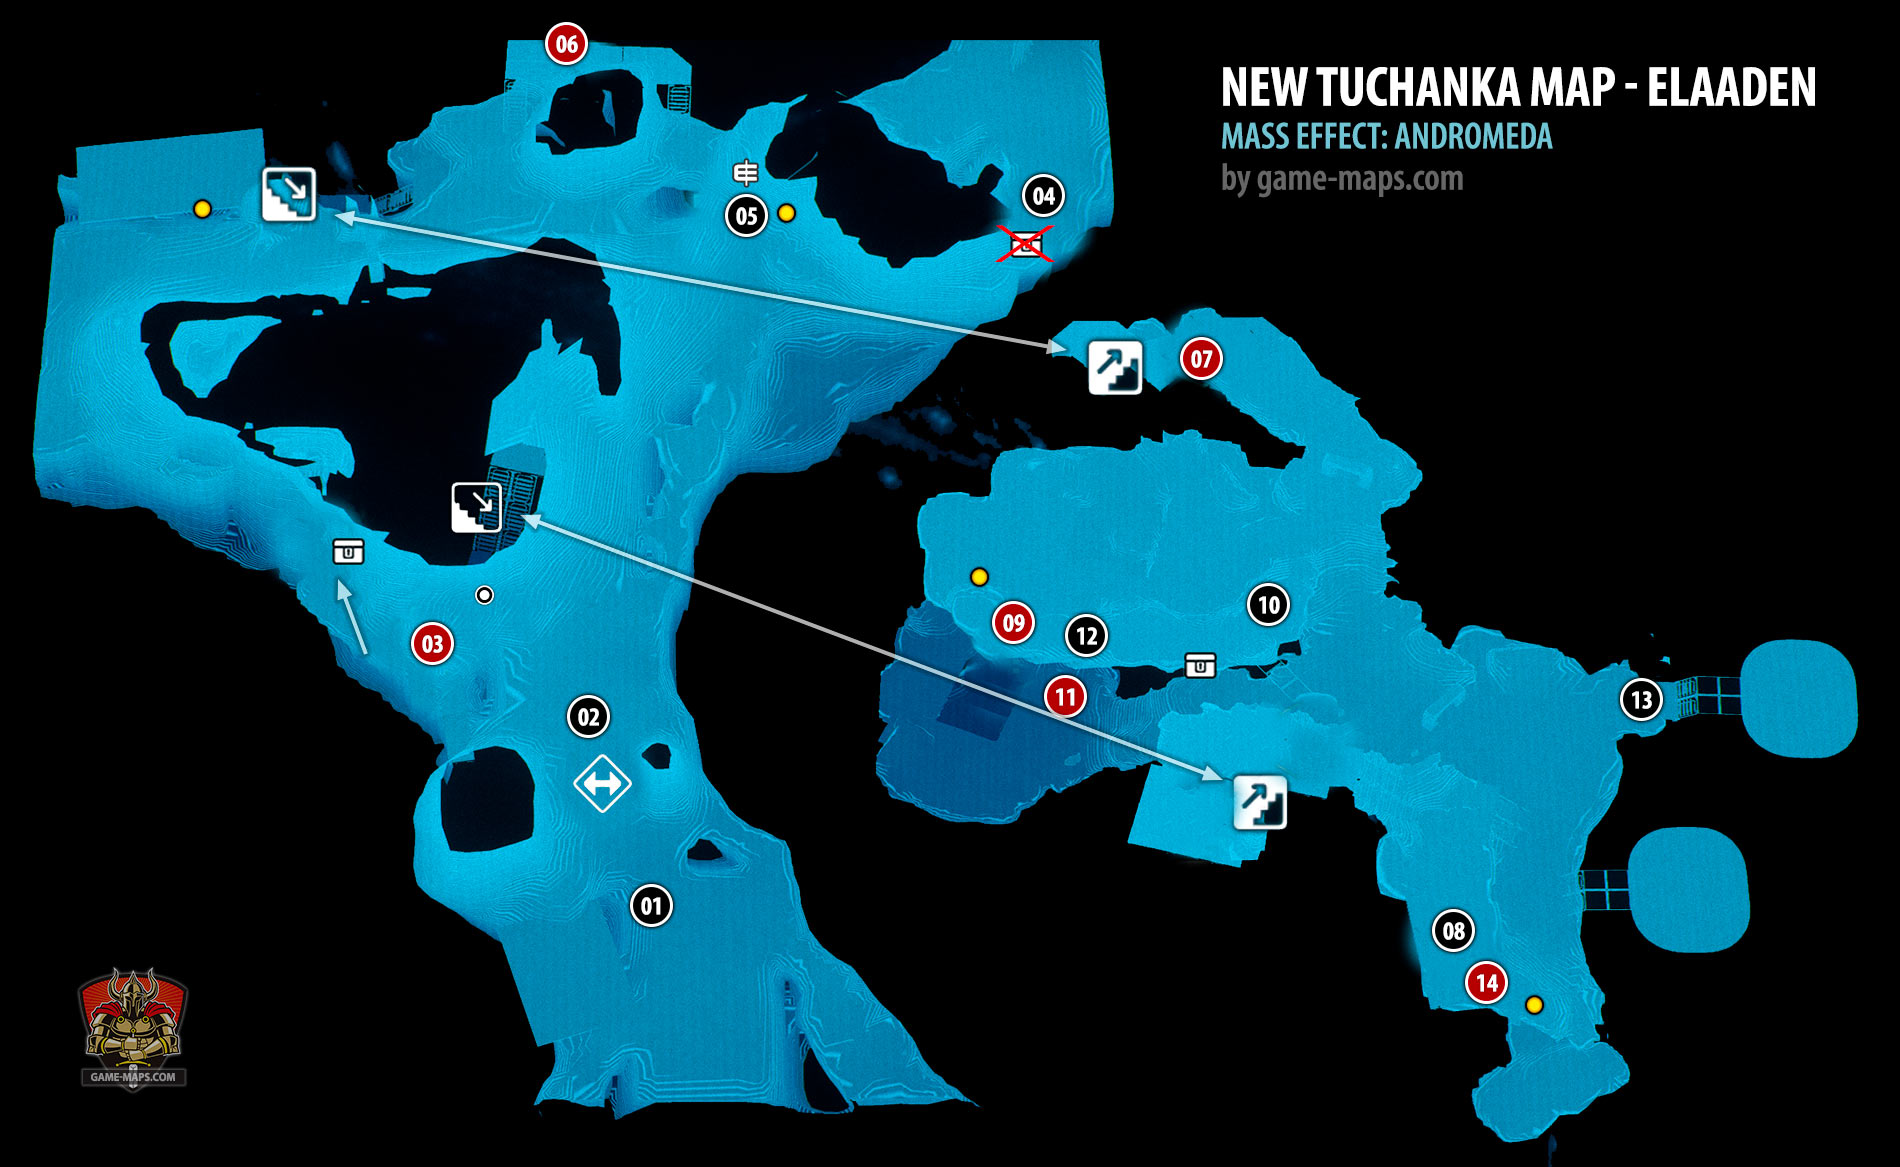 New Tuchanka - Elaaden Map for Mass Effect Andromeda